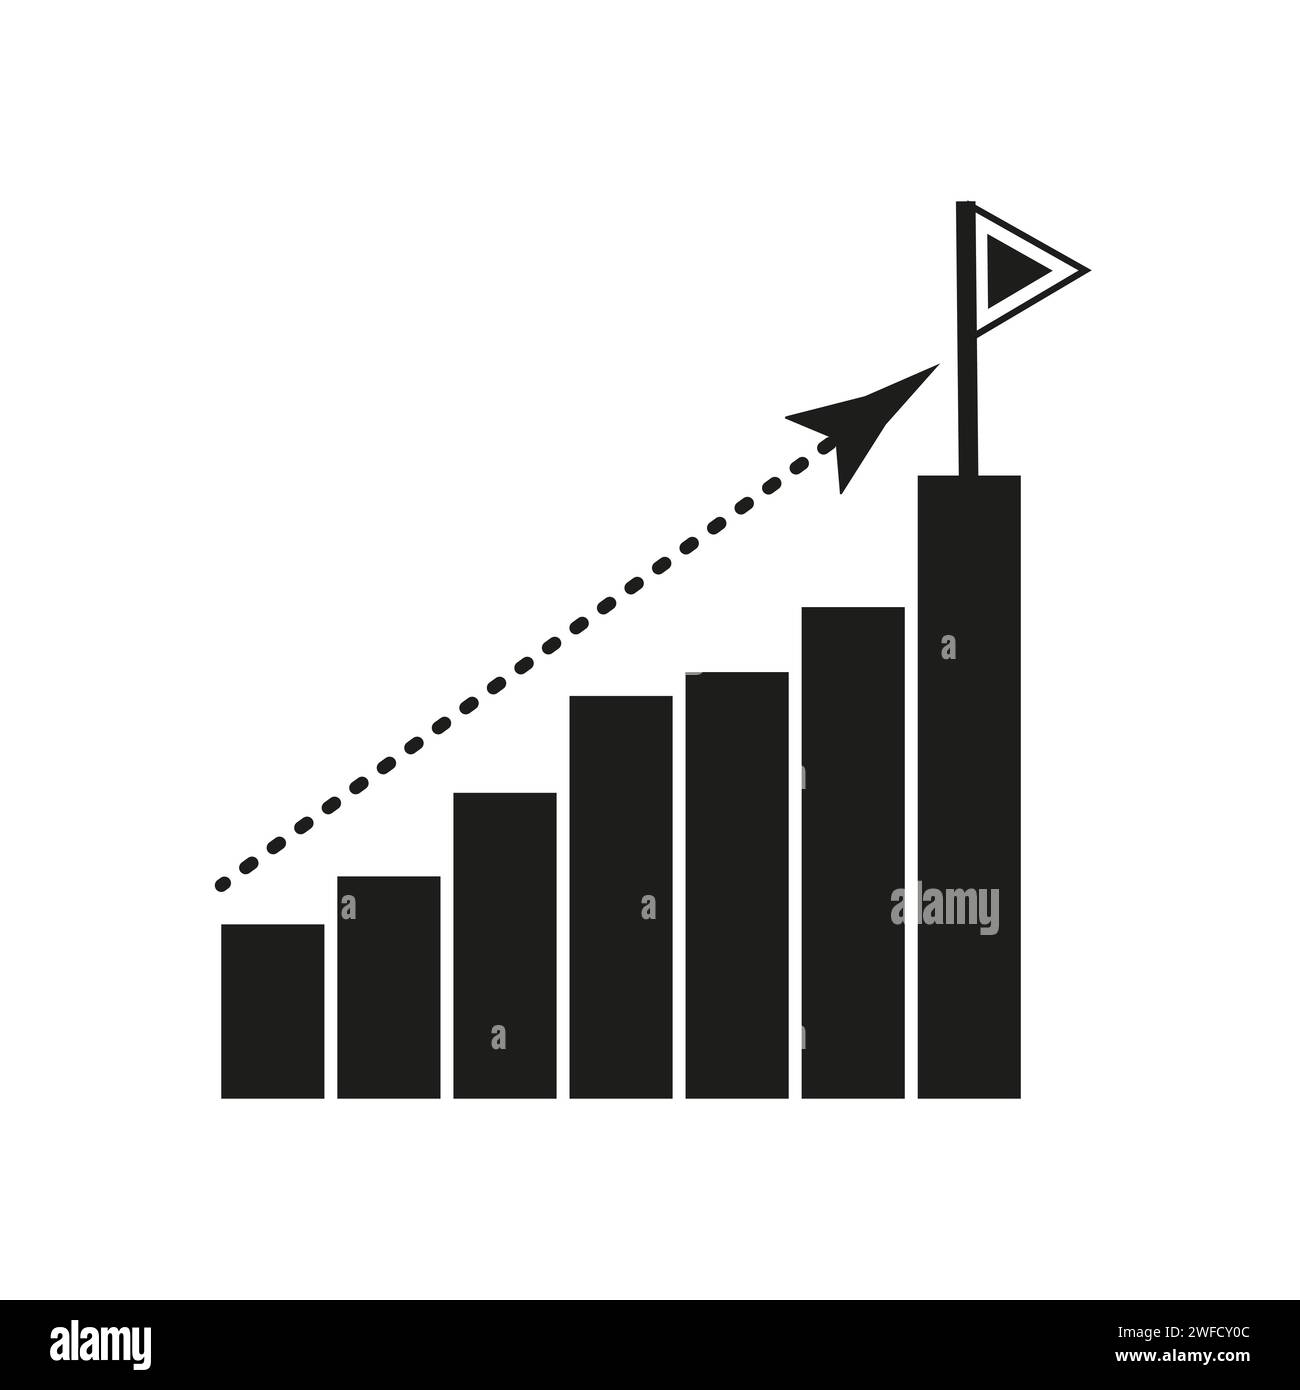 Graph arrow icon. Growth stock diagram financial graph. Financial report. Vector illustration. Stock image. EPS 10. Stock Vector